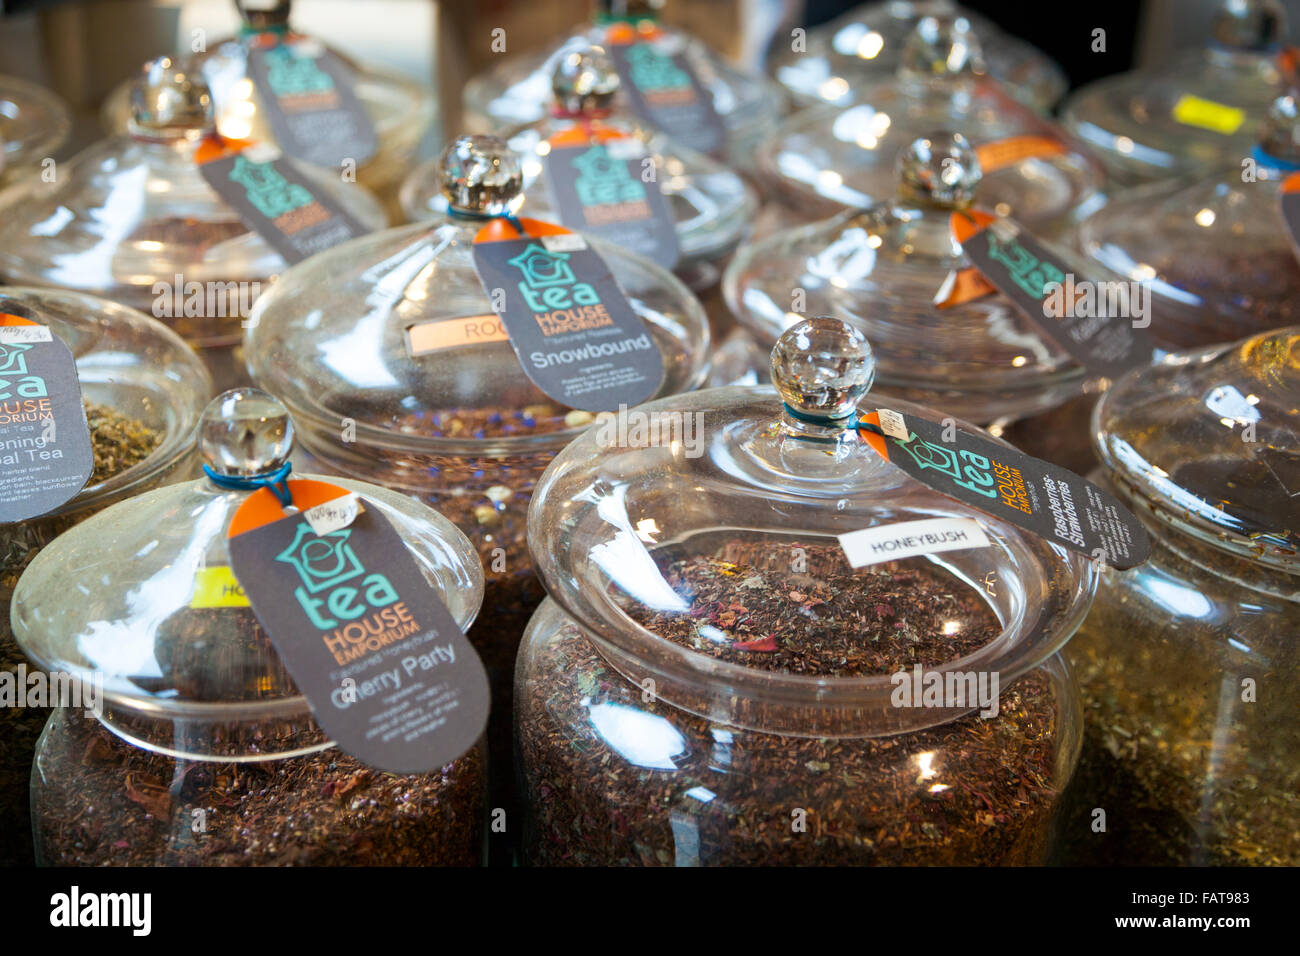 Glass jars with tea at Tea House Emporium in Bath, UK Stock Photo